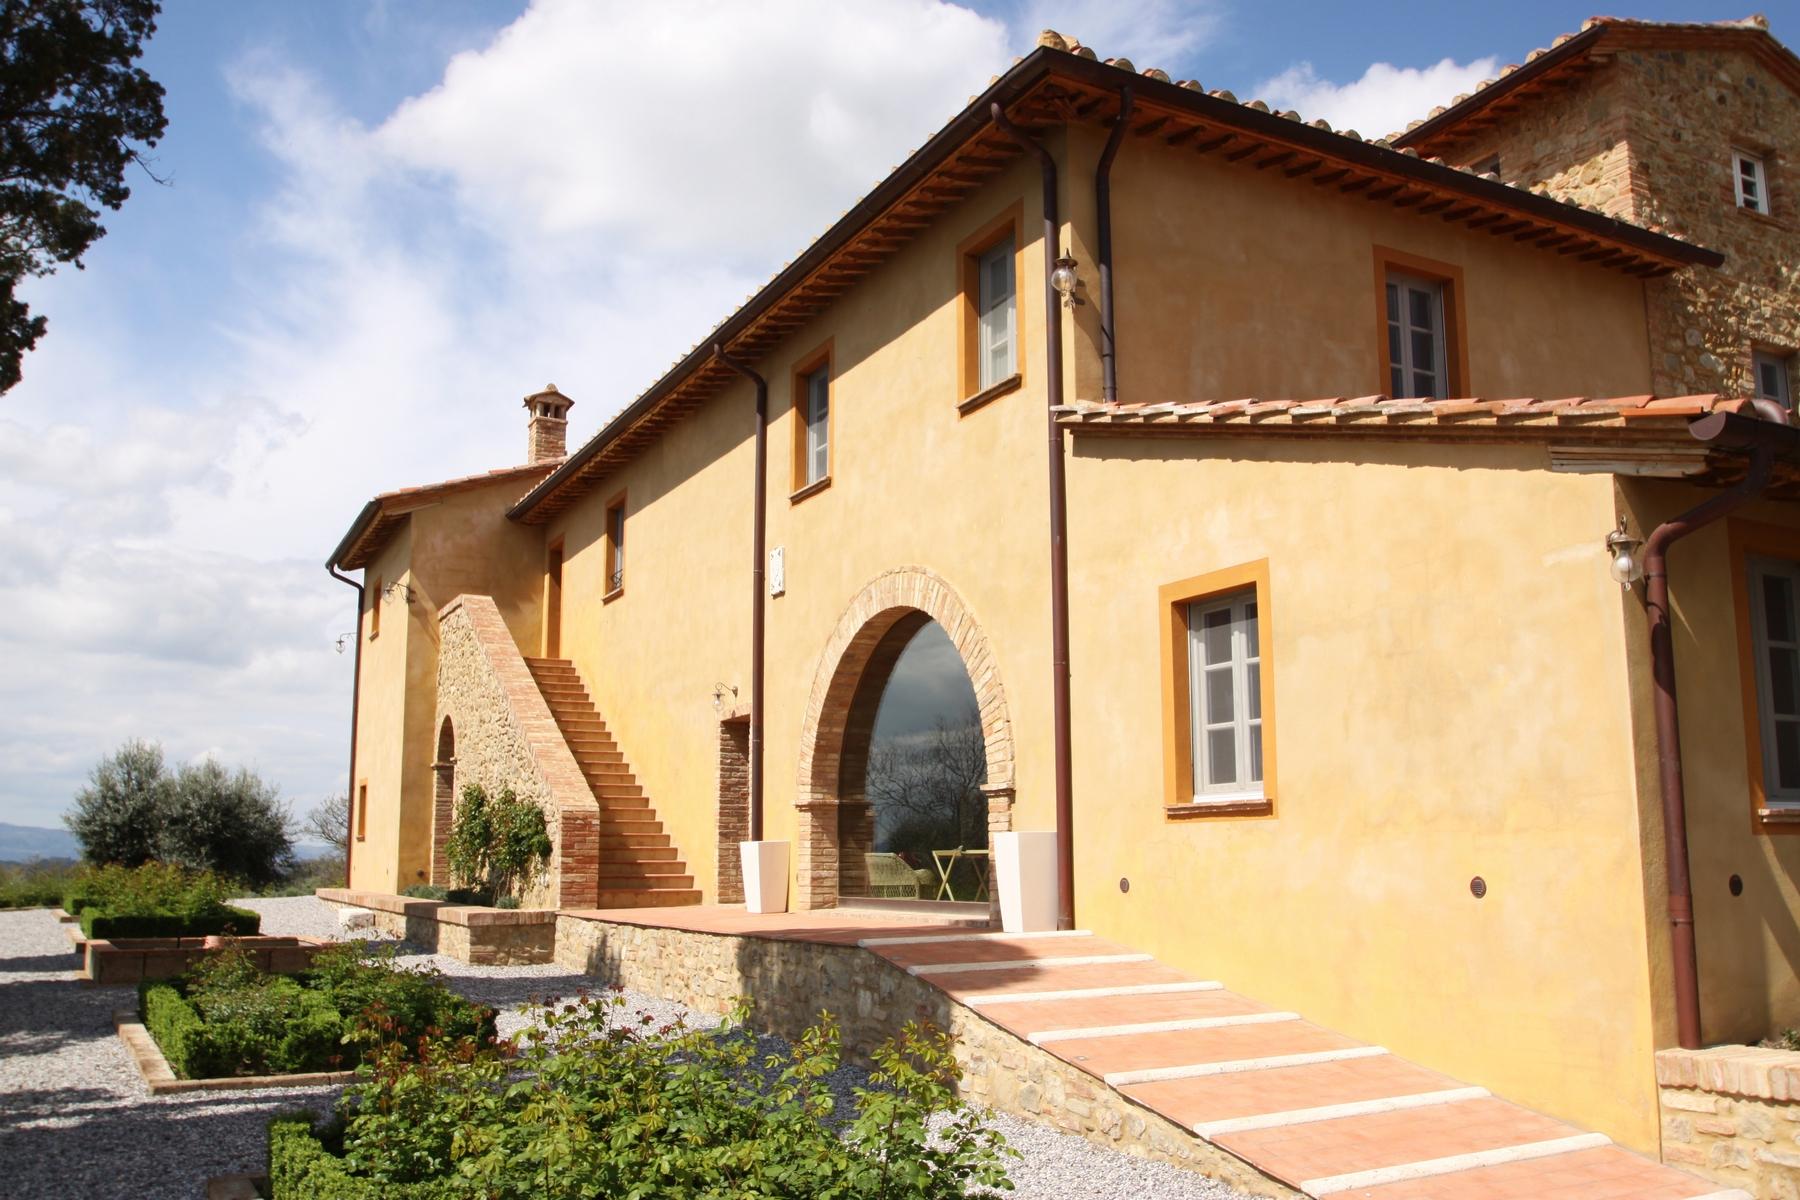 Wonderful Villa in the Tuscan countryside - 2